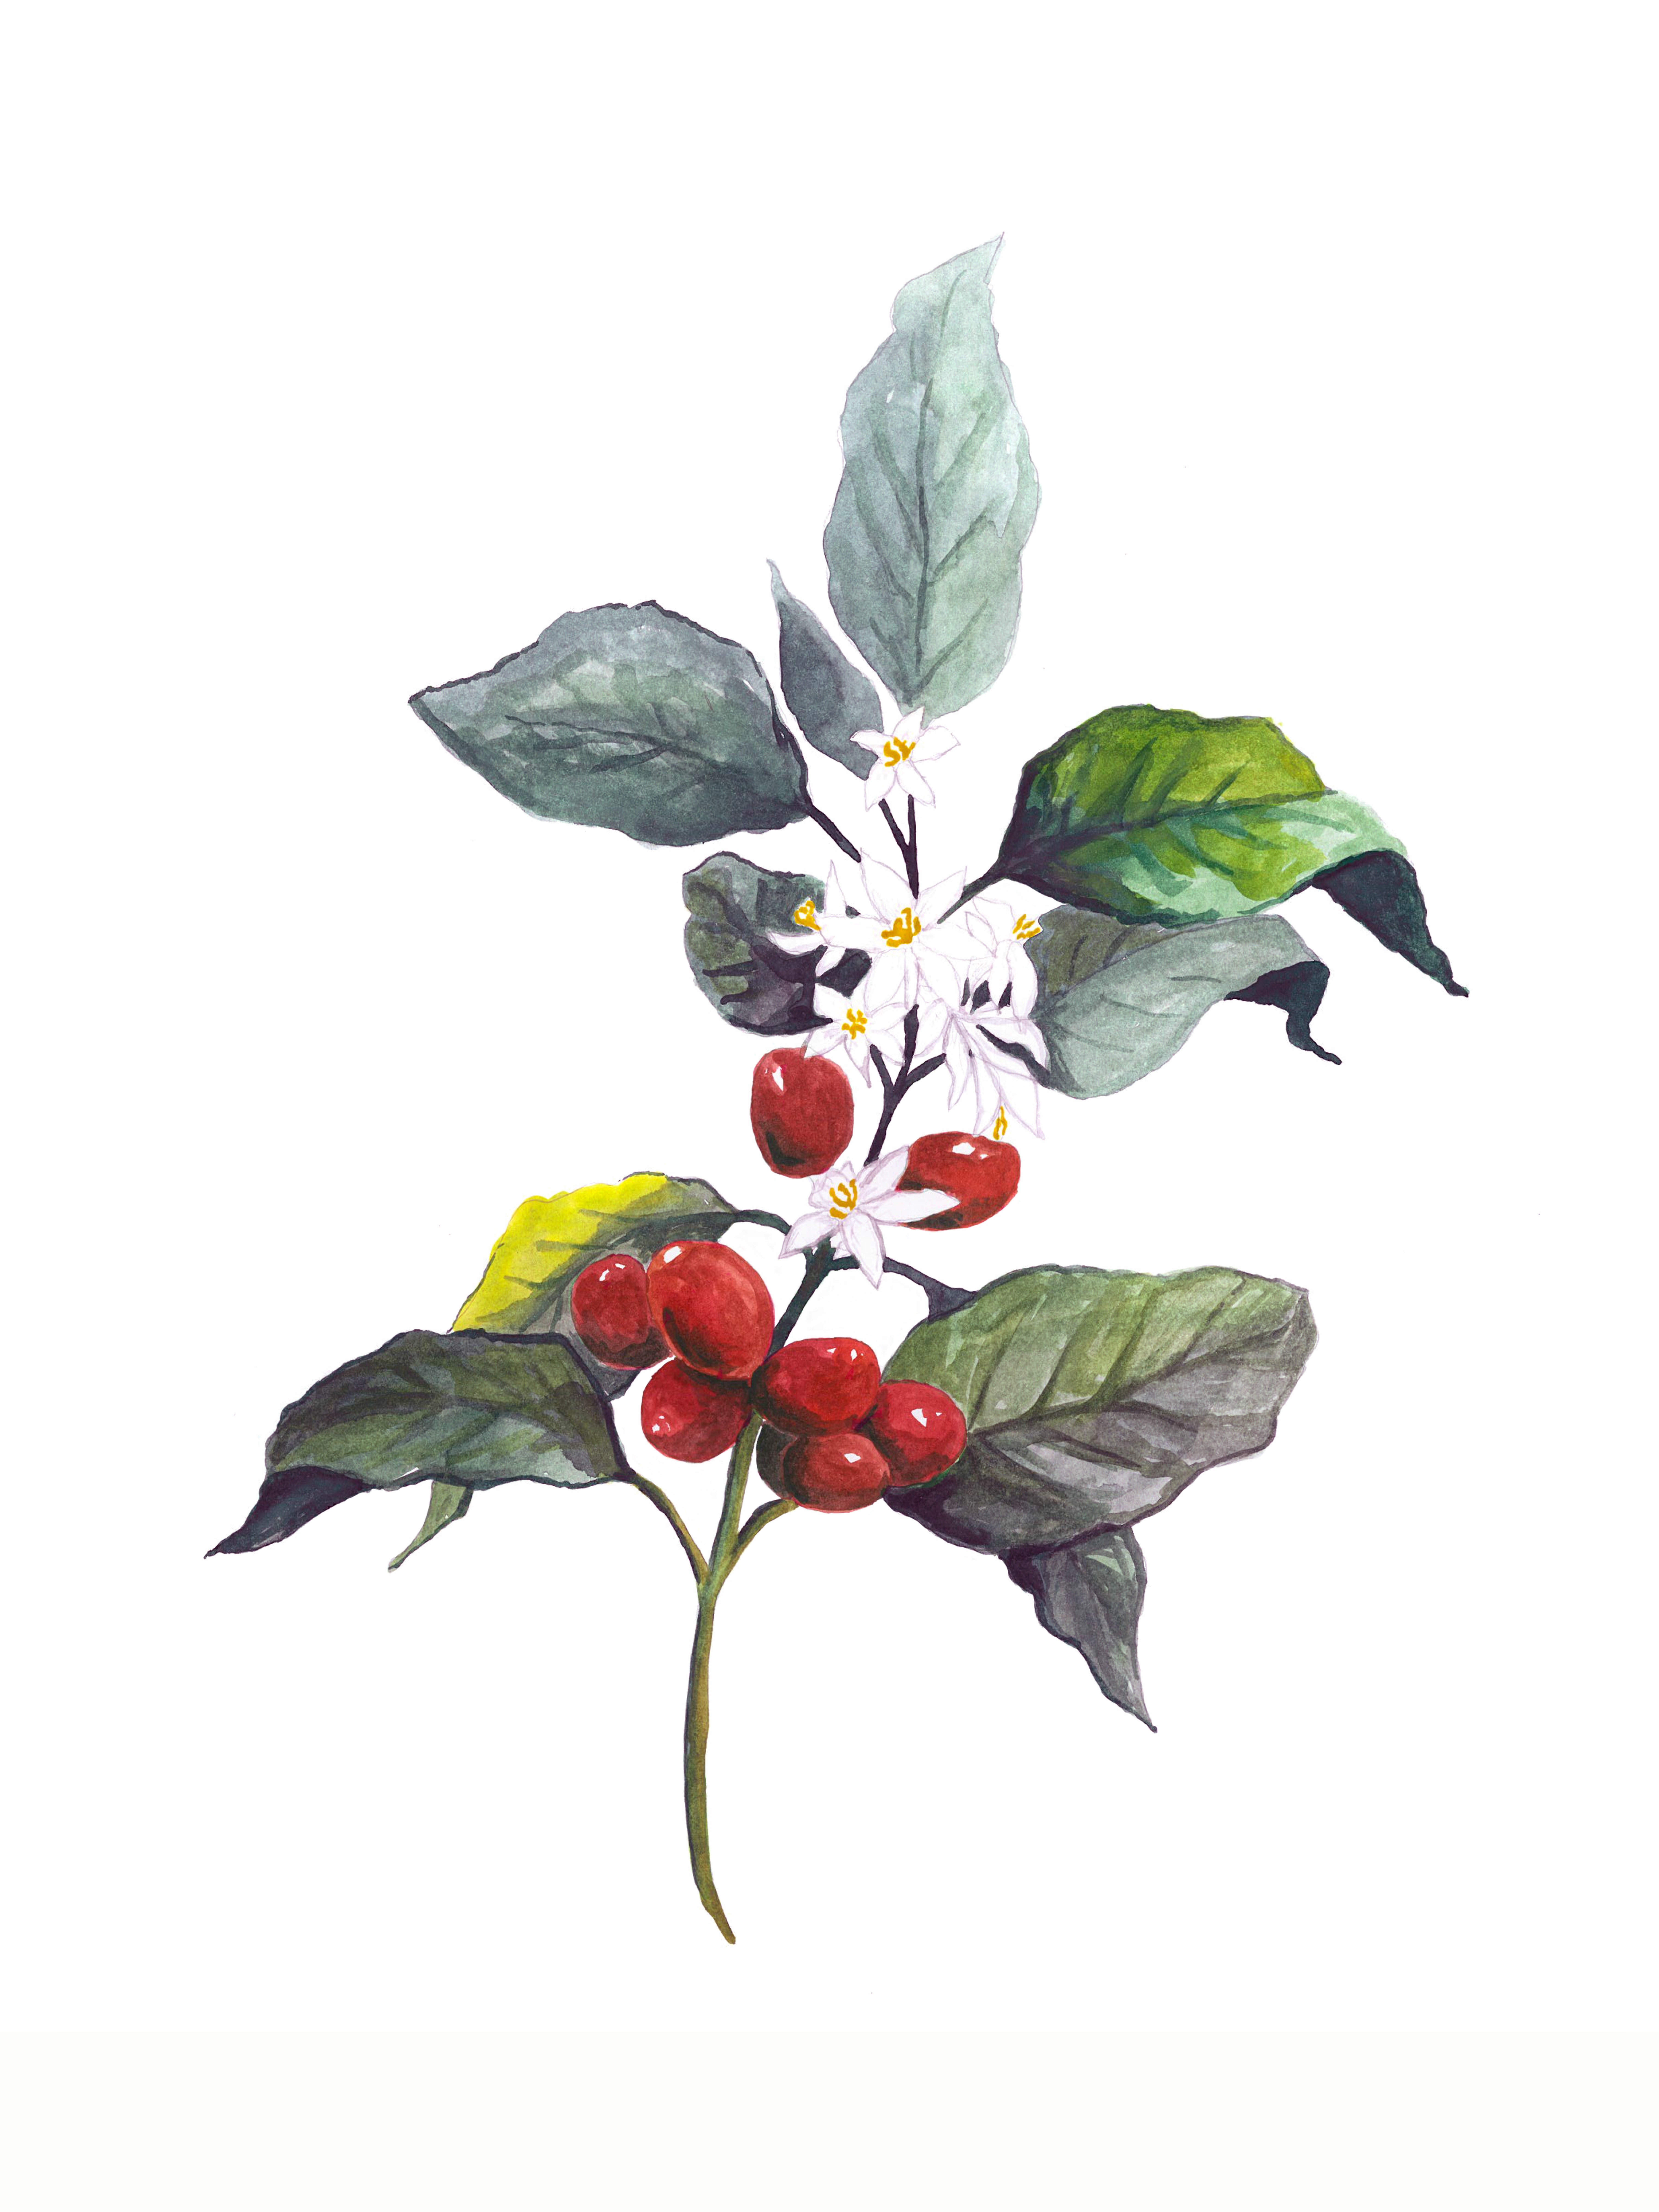 725-1botanical-illustration---1coffea-arabica-1635161226494.jpg